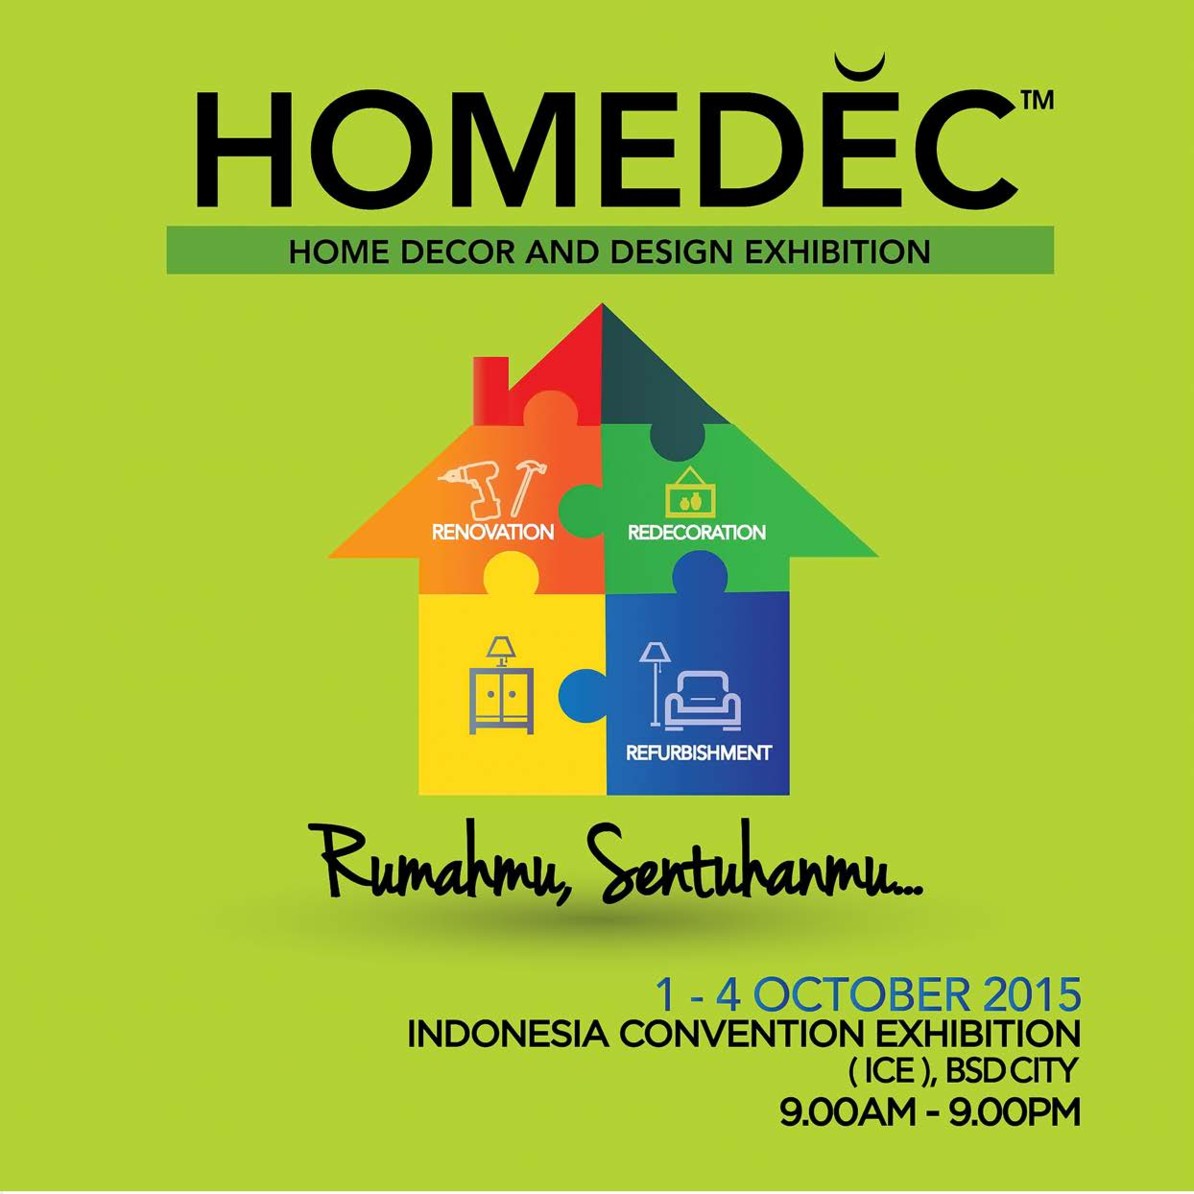 HOMEDEC Jakarta Oct 2015 안내-001-001.jpg